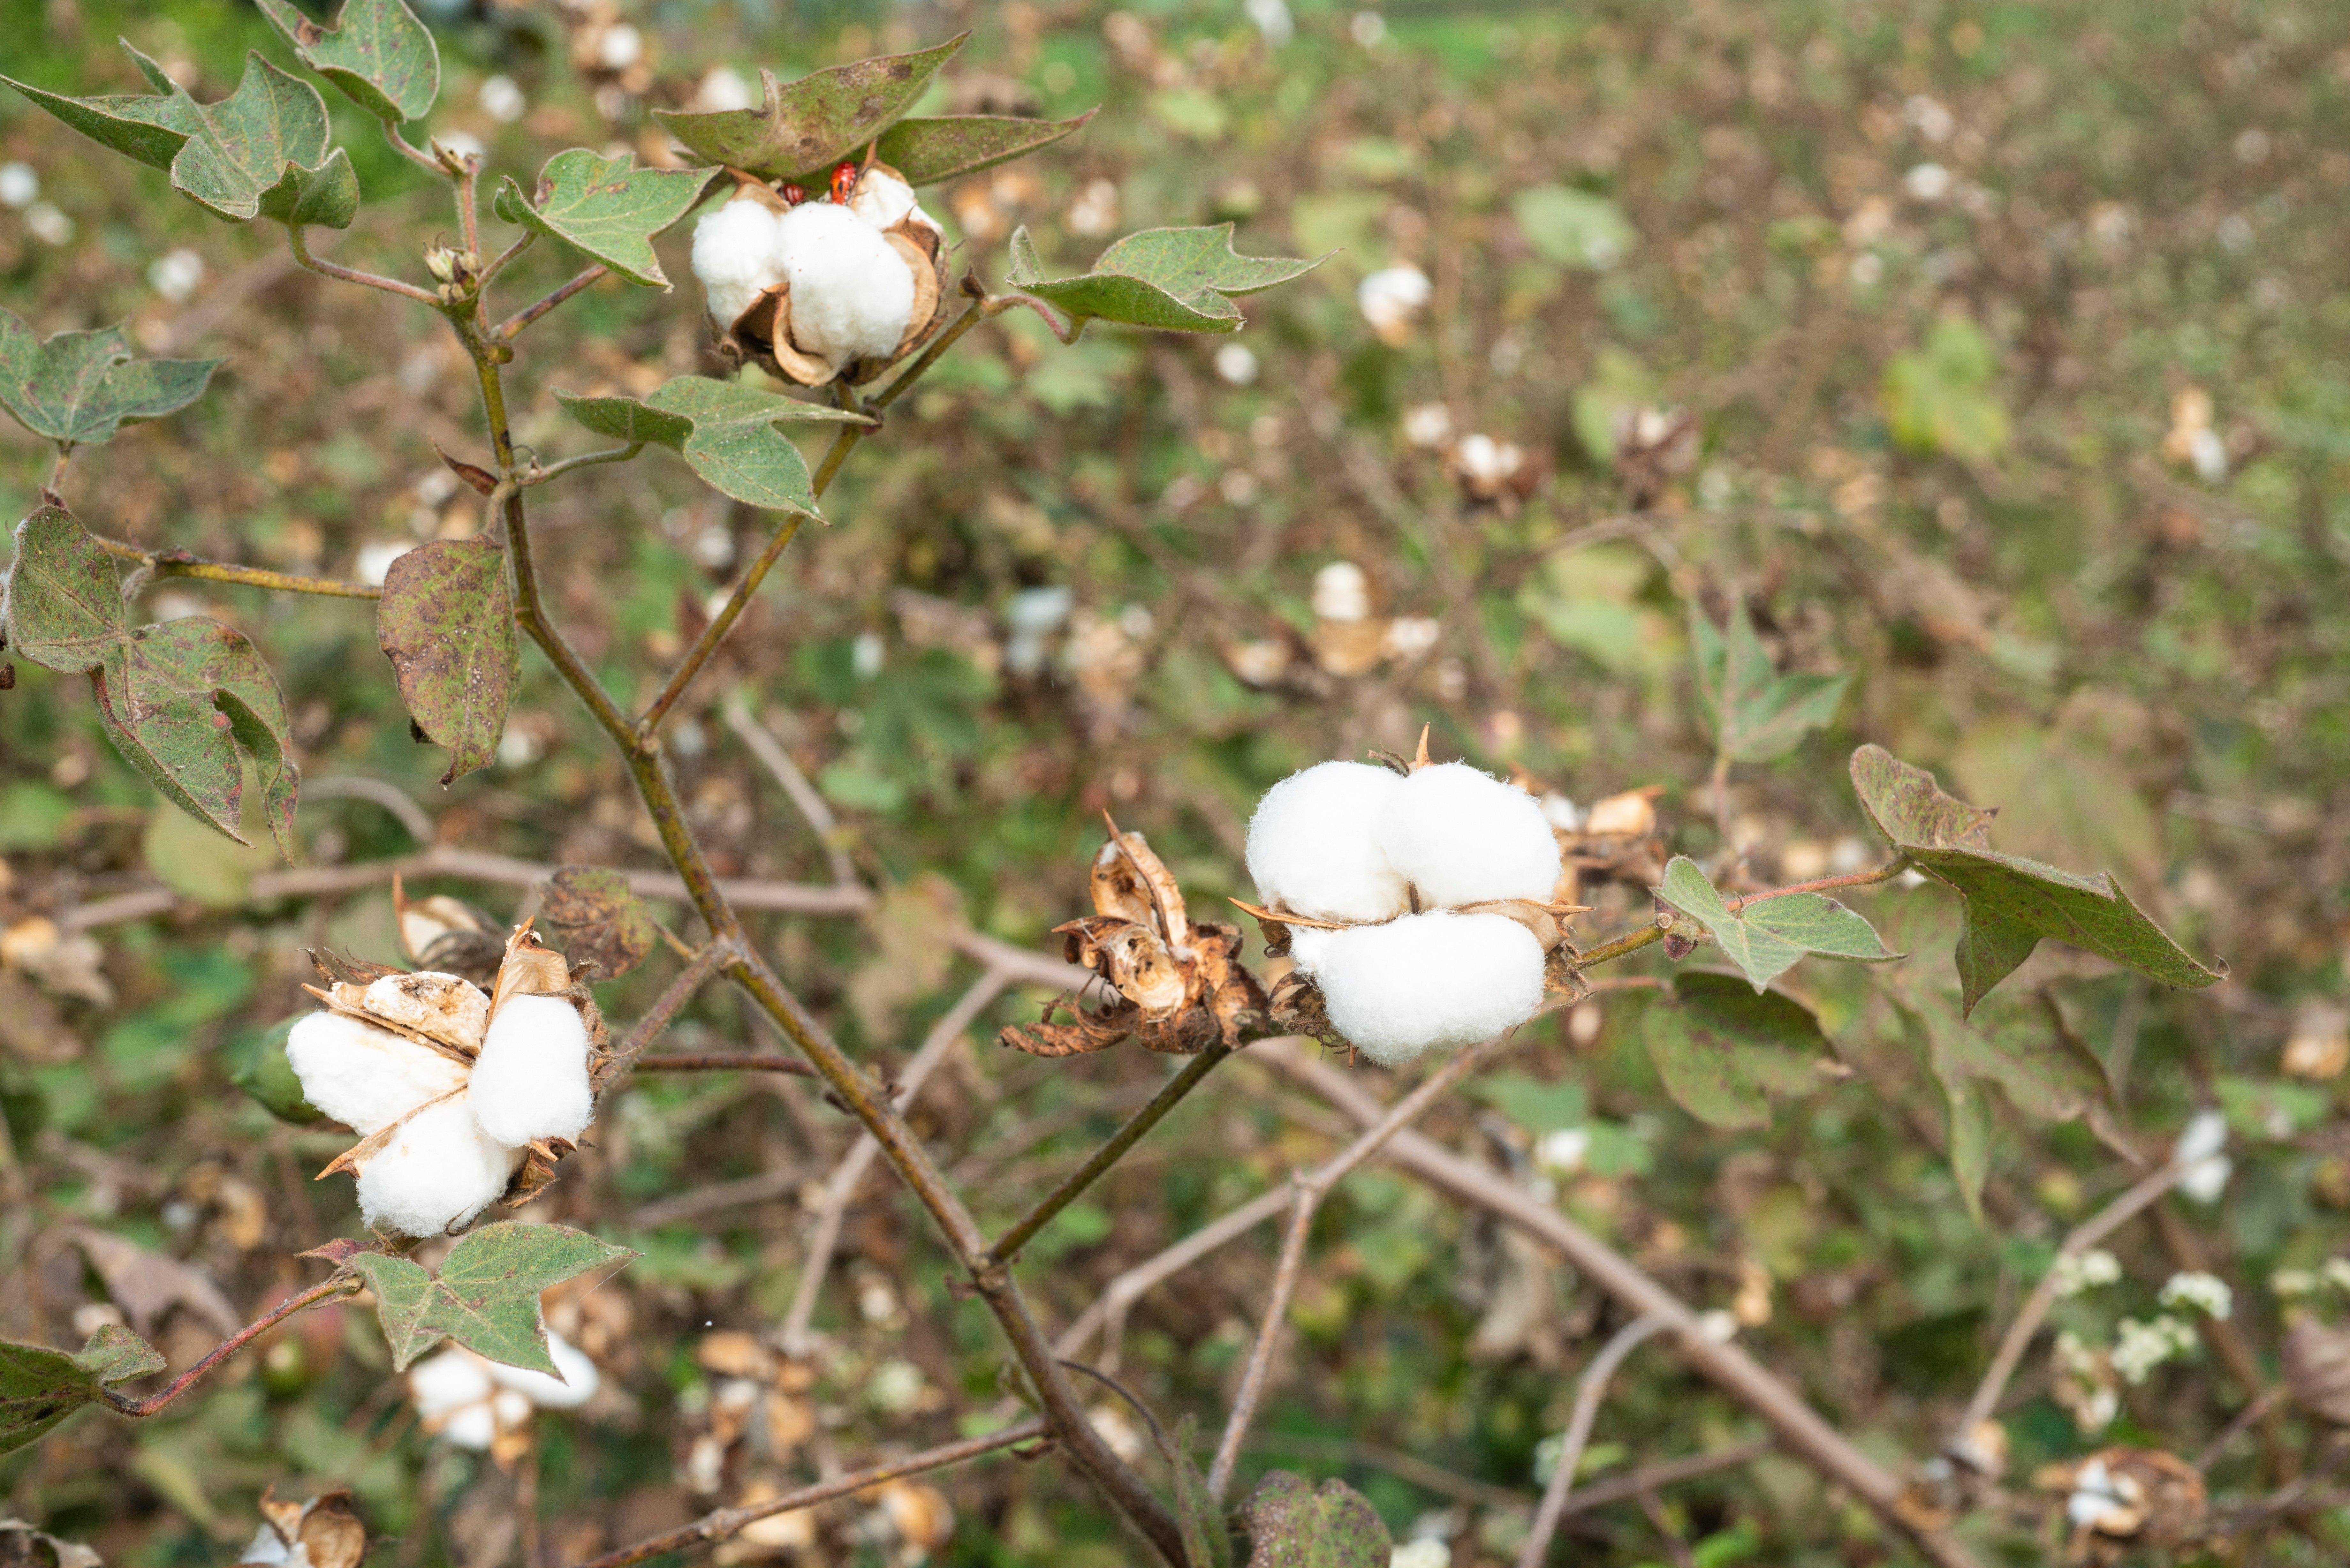 A picture of cotton plants